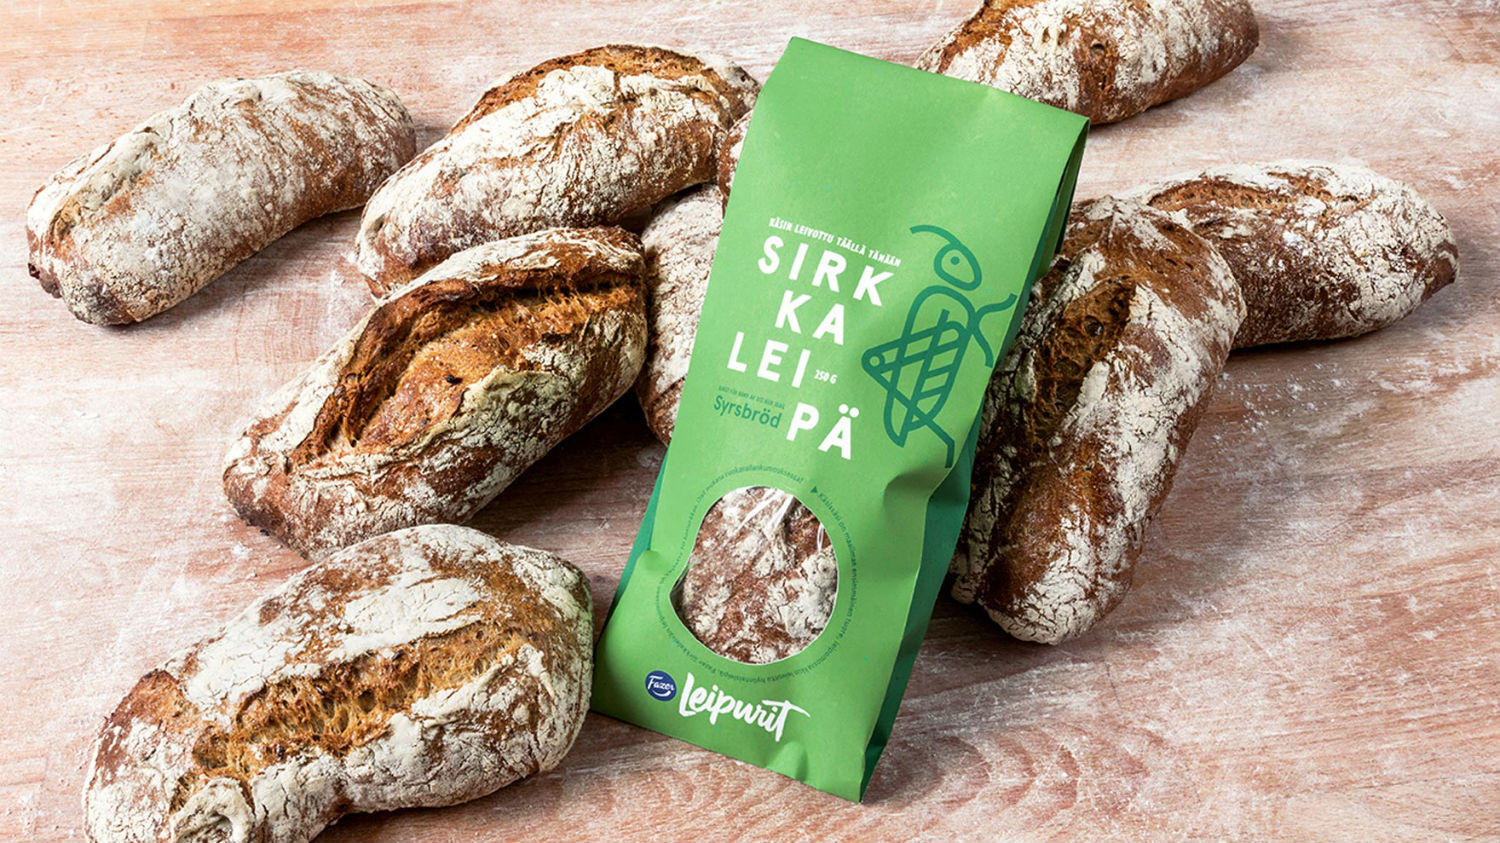 Финский хлеб, который быстро раскупают https://www.unipack.ru/light_editor_img/images/2017-12-28/